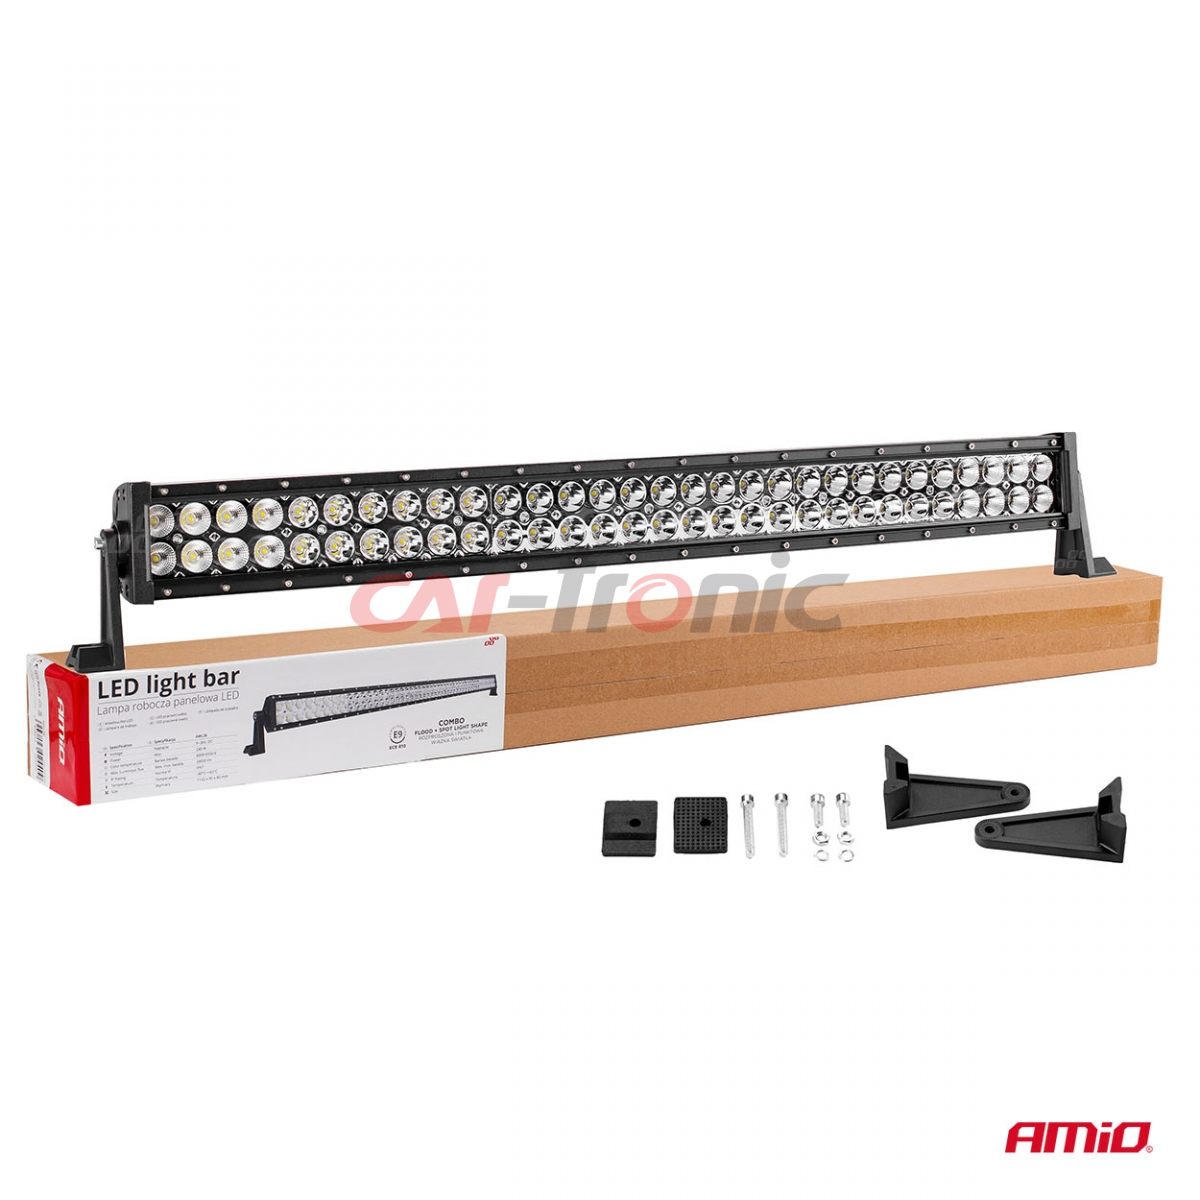 Lampa robocza panelowa LED BAR prosta 87 cm 9-36V AMIO-02439 AWL25